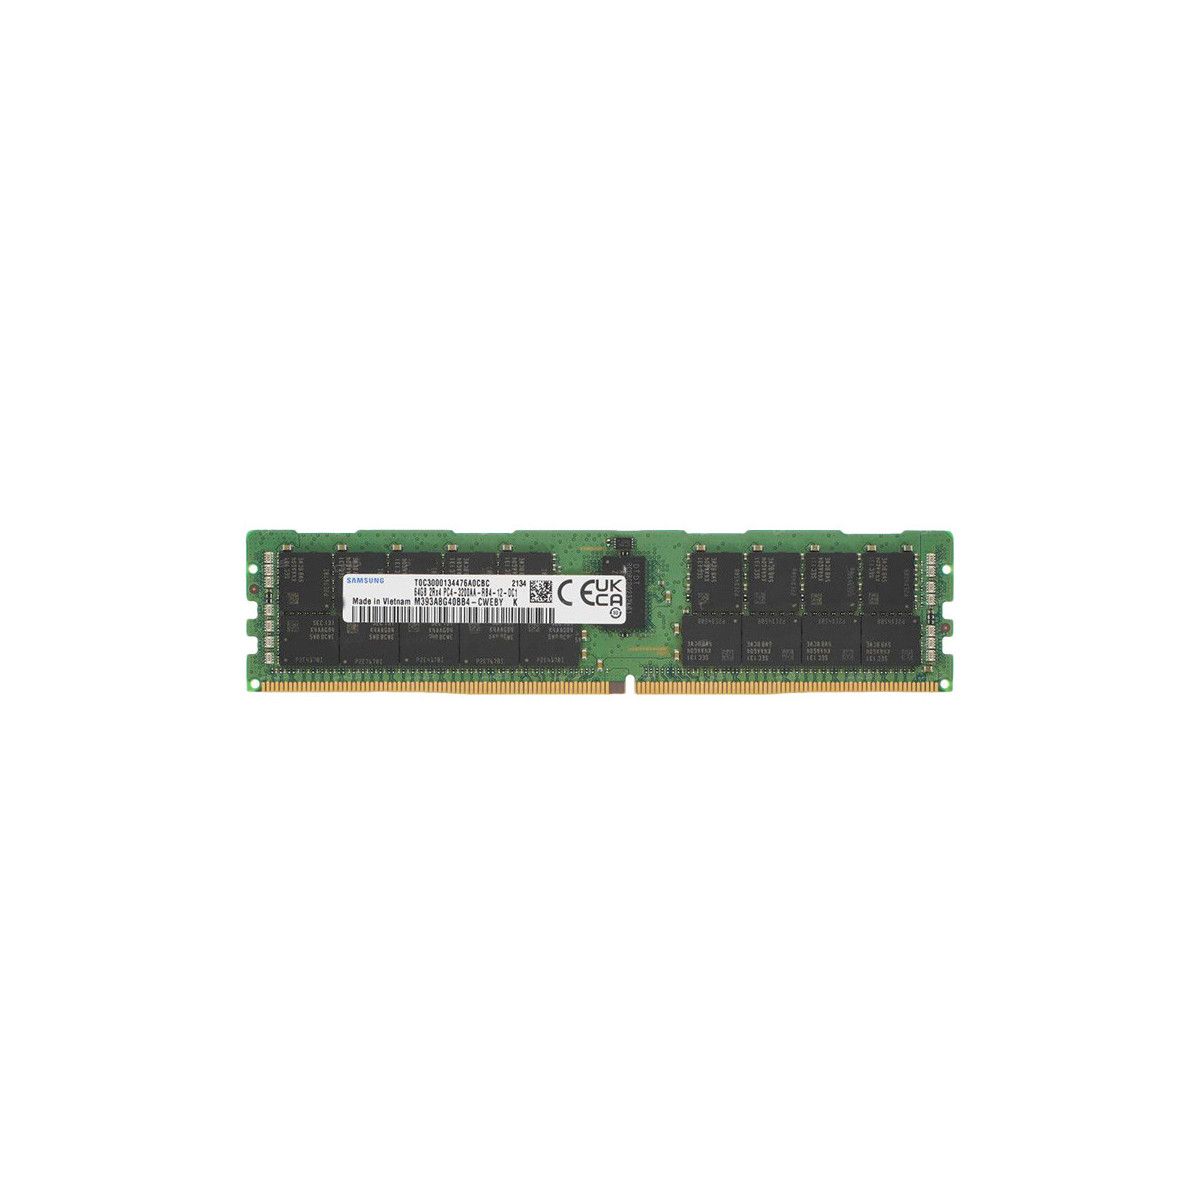 AB214253-MS - Memstar 1x 64GB DDR4-3200 RDIMM PC4-25600R - Mem-Star Kompatibel OEM Speichermedien 1 - Memstar 